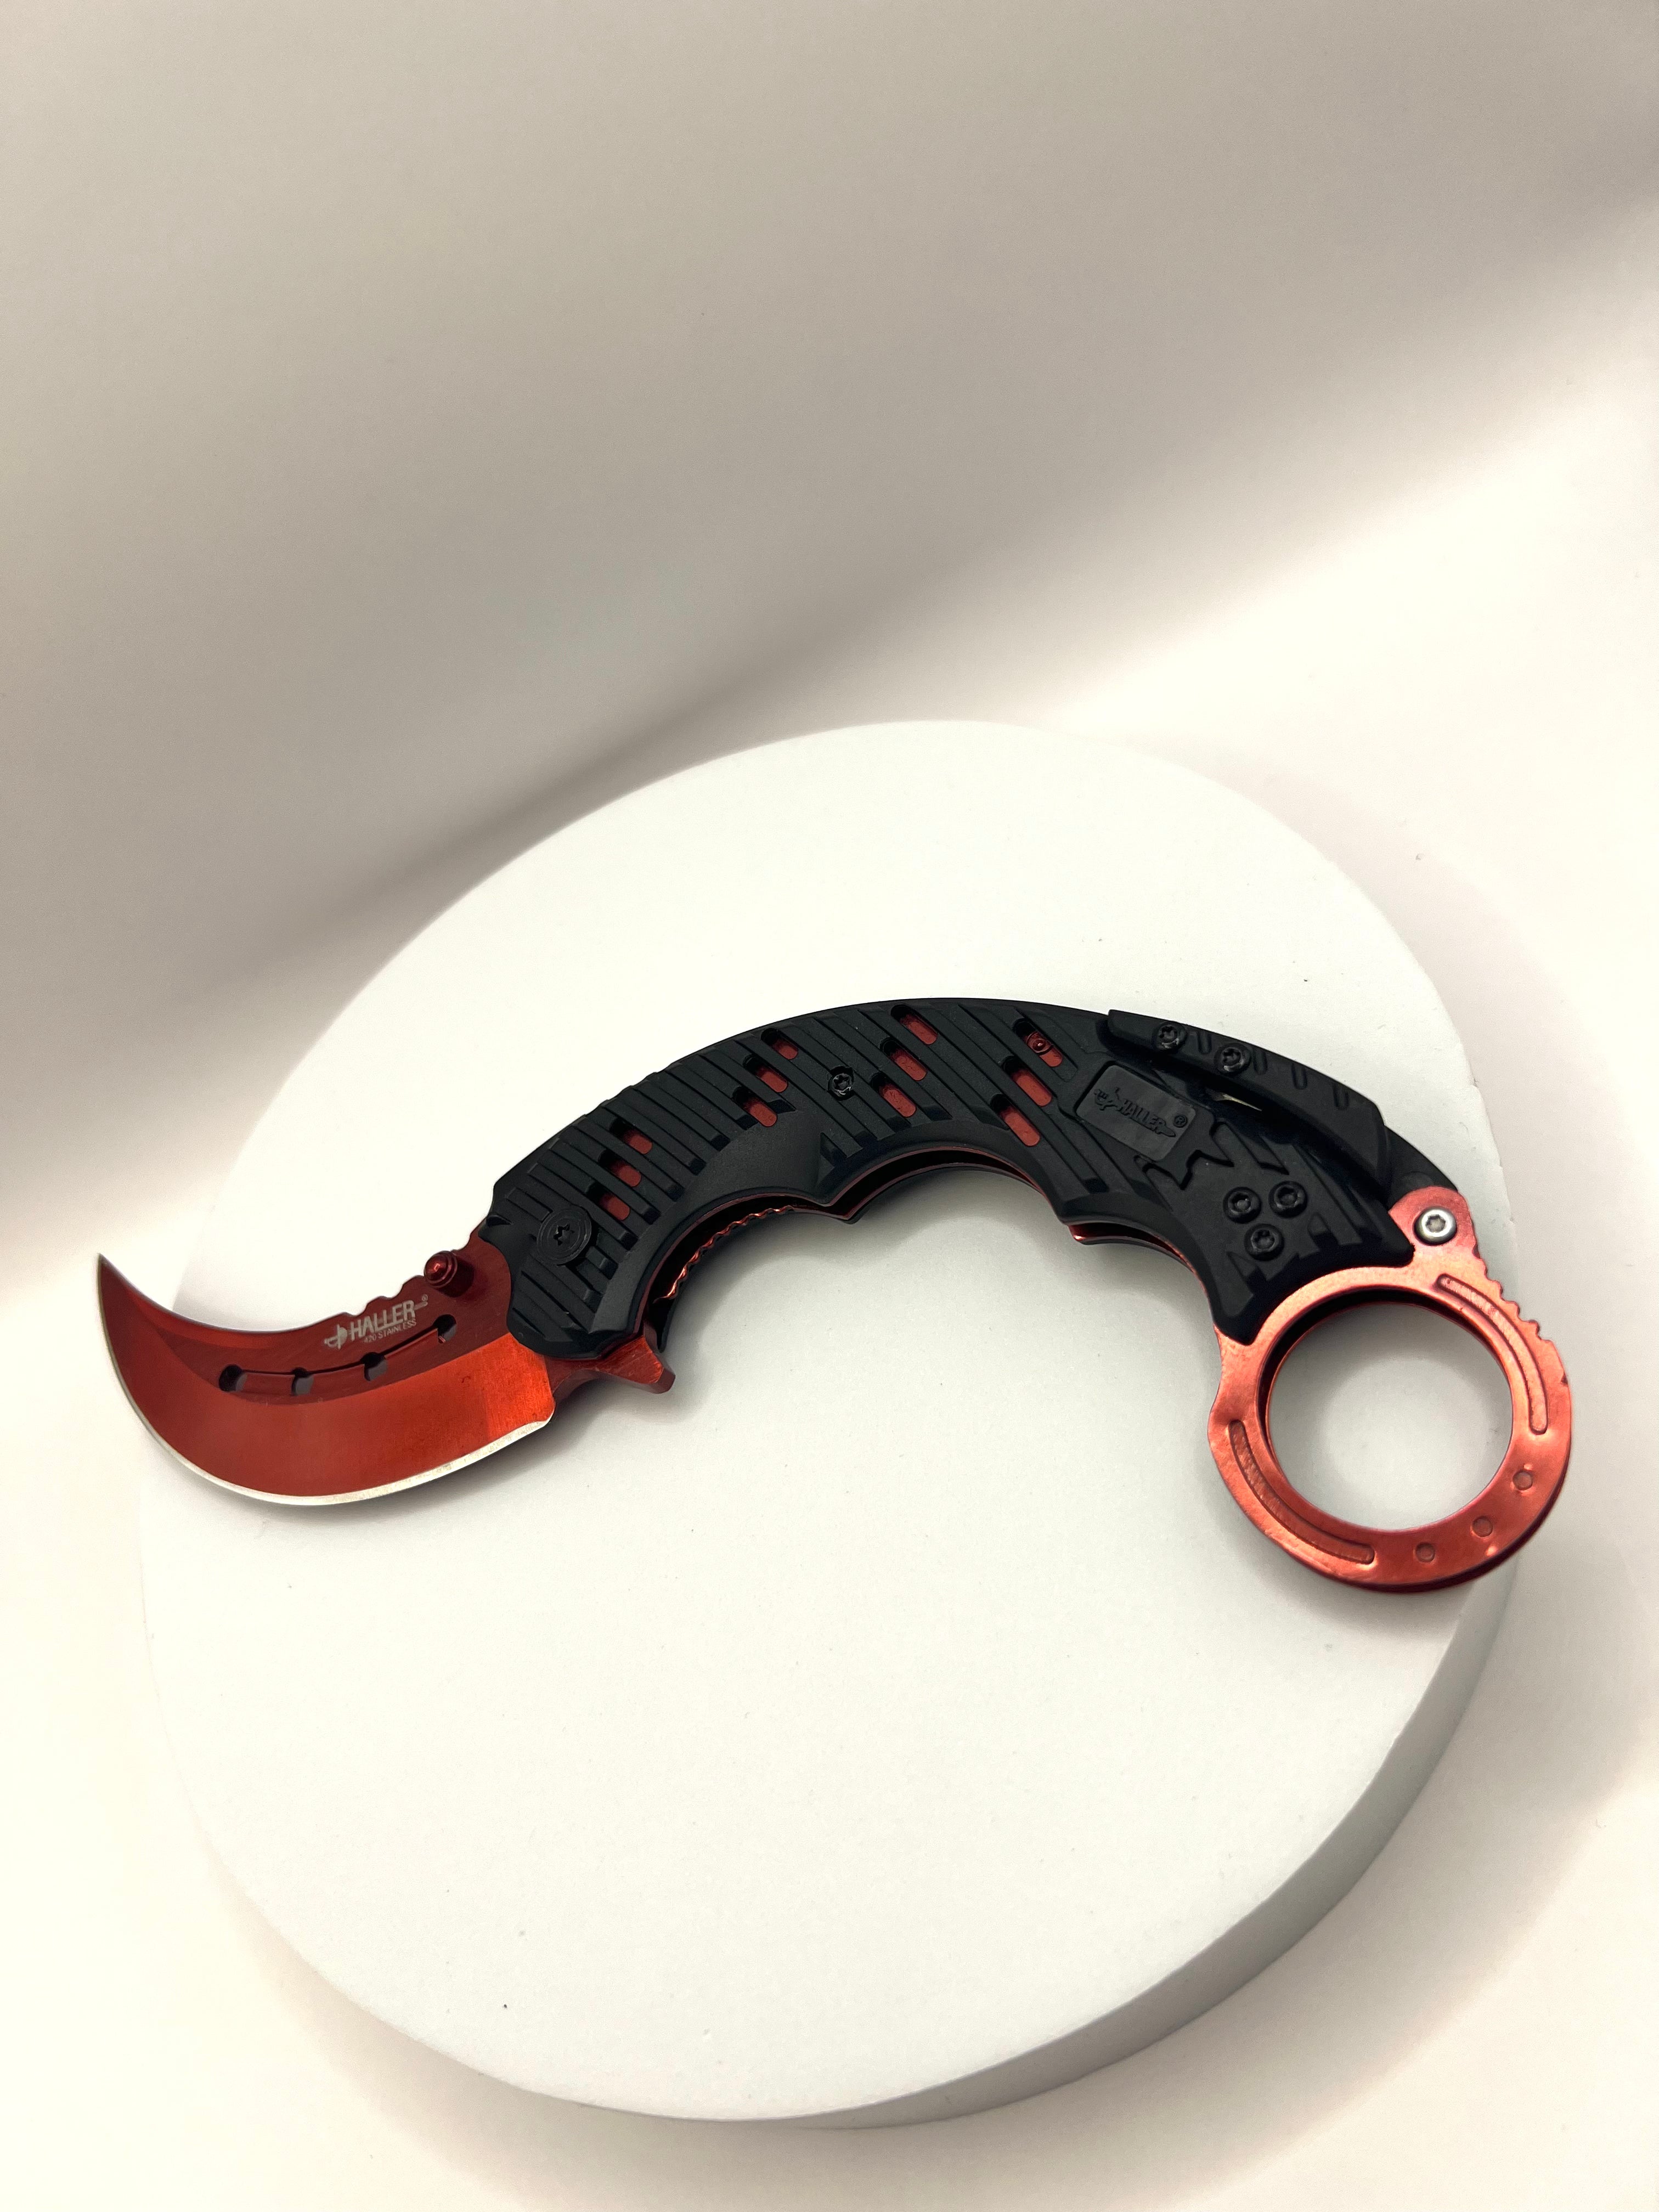 Karambit pocket knife in red